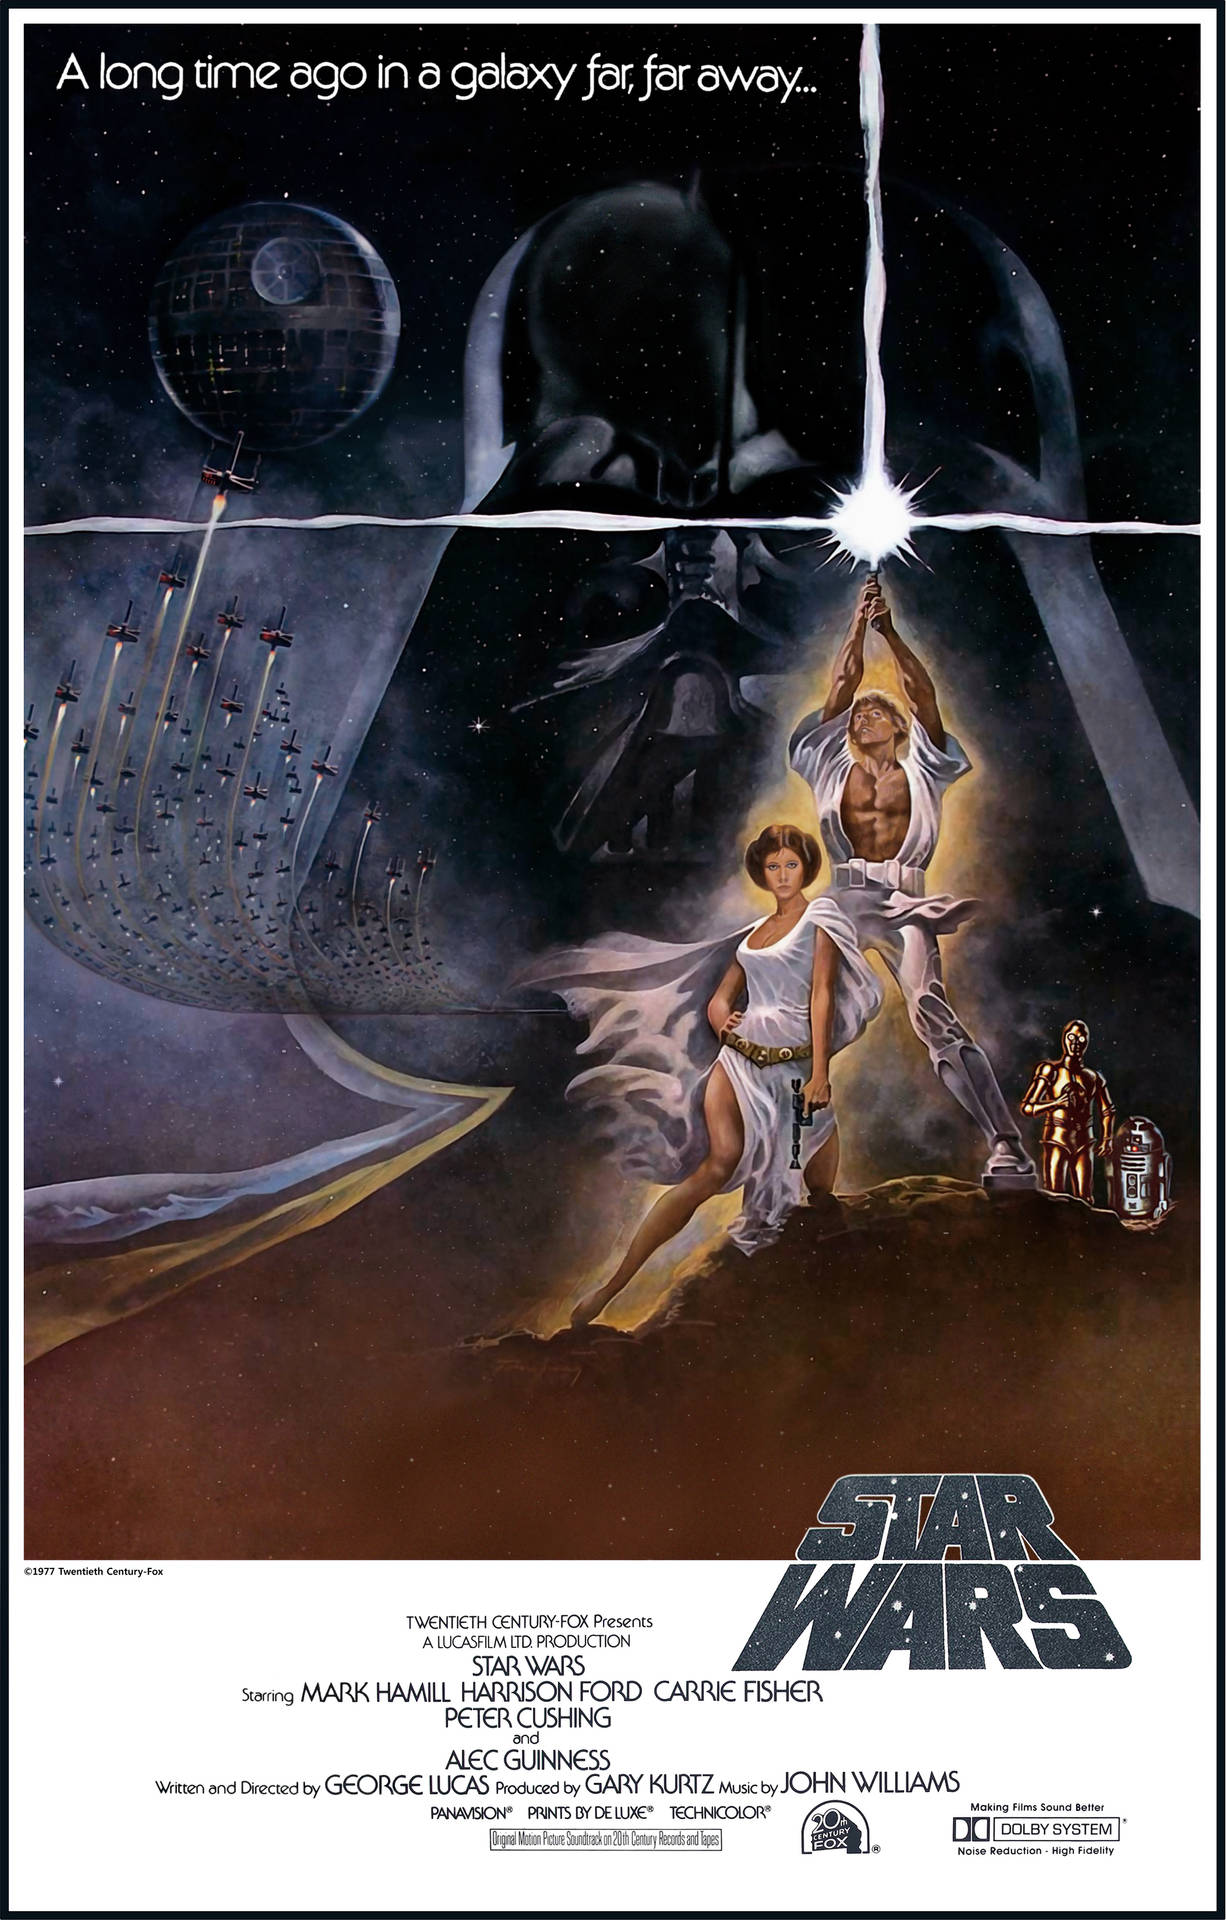 Peter Cushing Star Wars 1977 Movie Poster Background